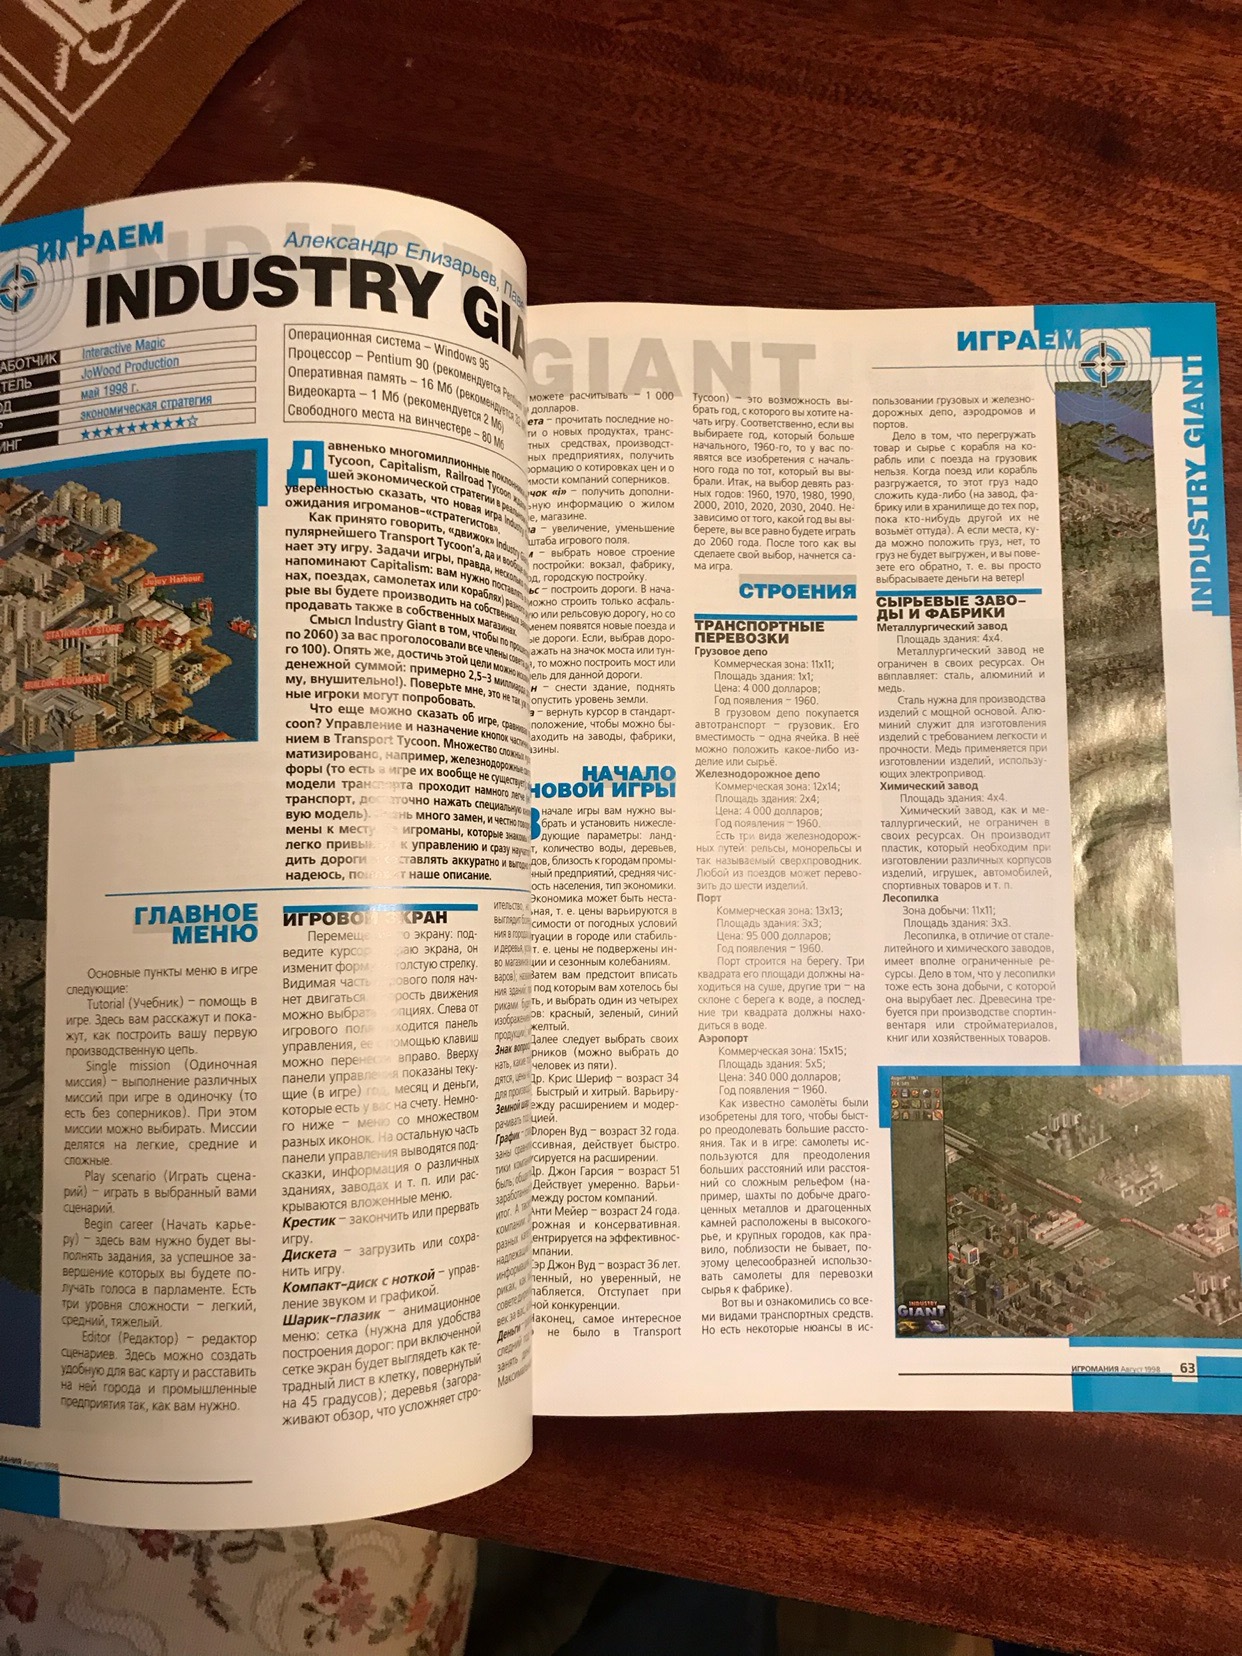 Gaming Magazine Collection Part 1 - Longpost, Journalism, Land of Games, Game World Navigator, Igromir, Lkies, Magazine, Press, gambling addiction, My